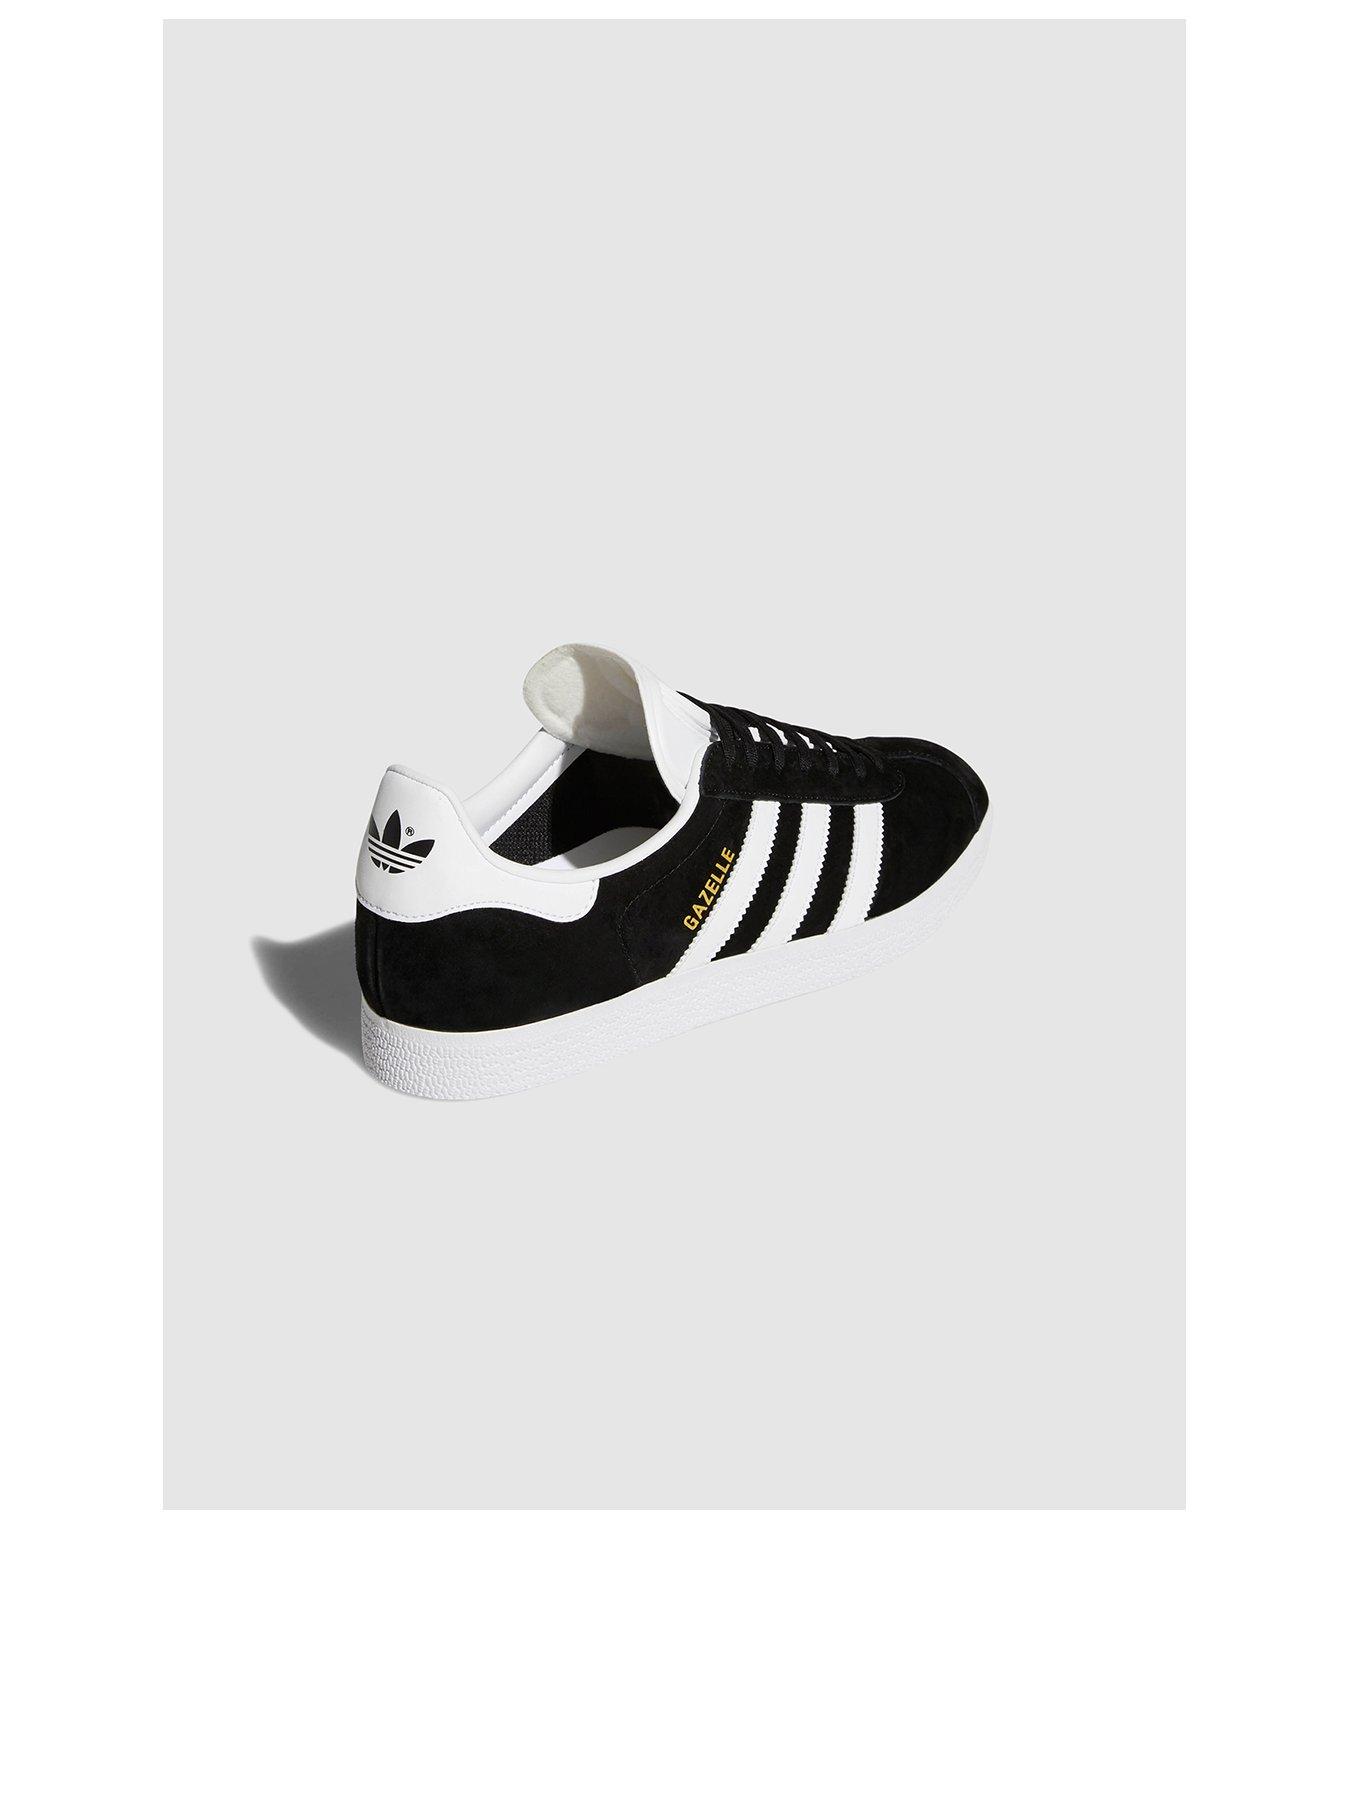 adidas Originals Gazelle Trainers - Black/White | Very.co.uk